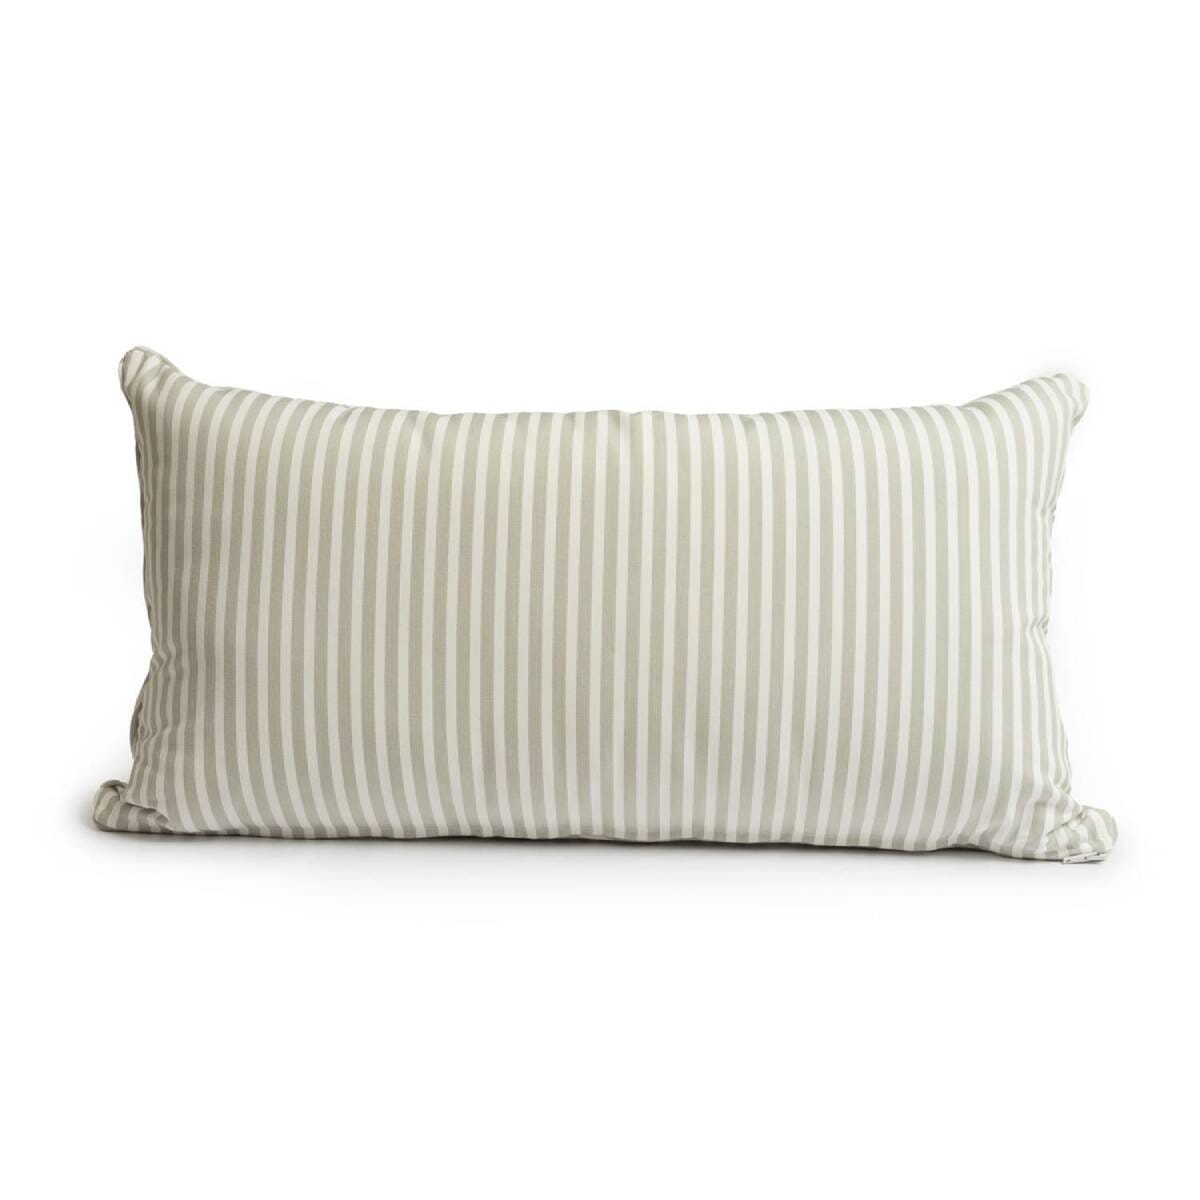 Studio image of sage rectangle throw pillow